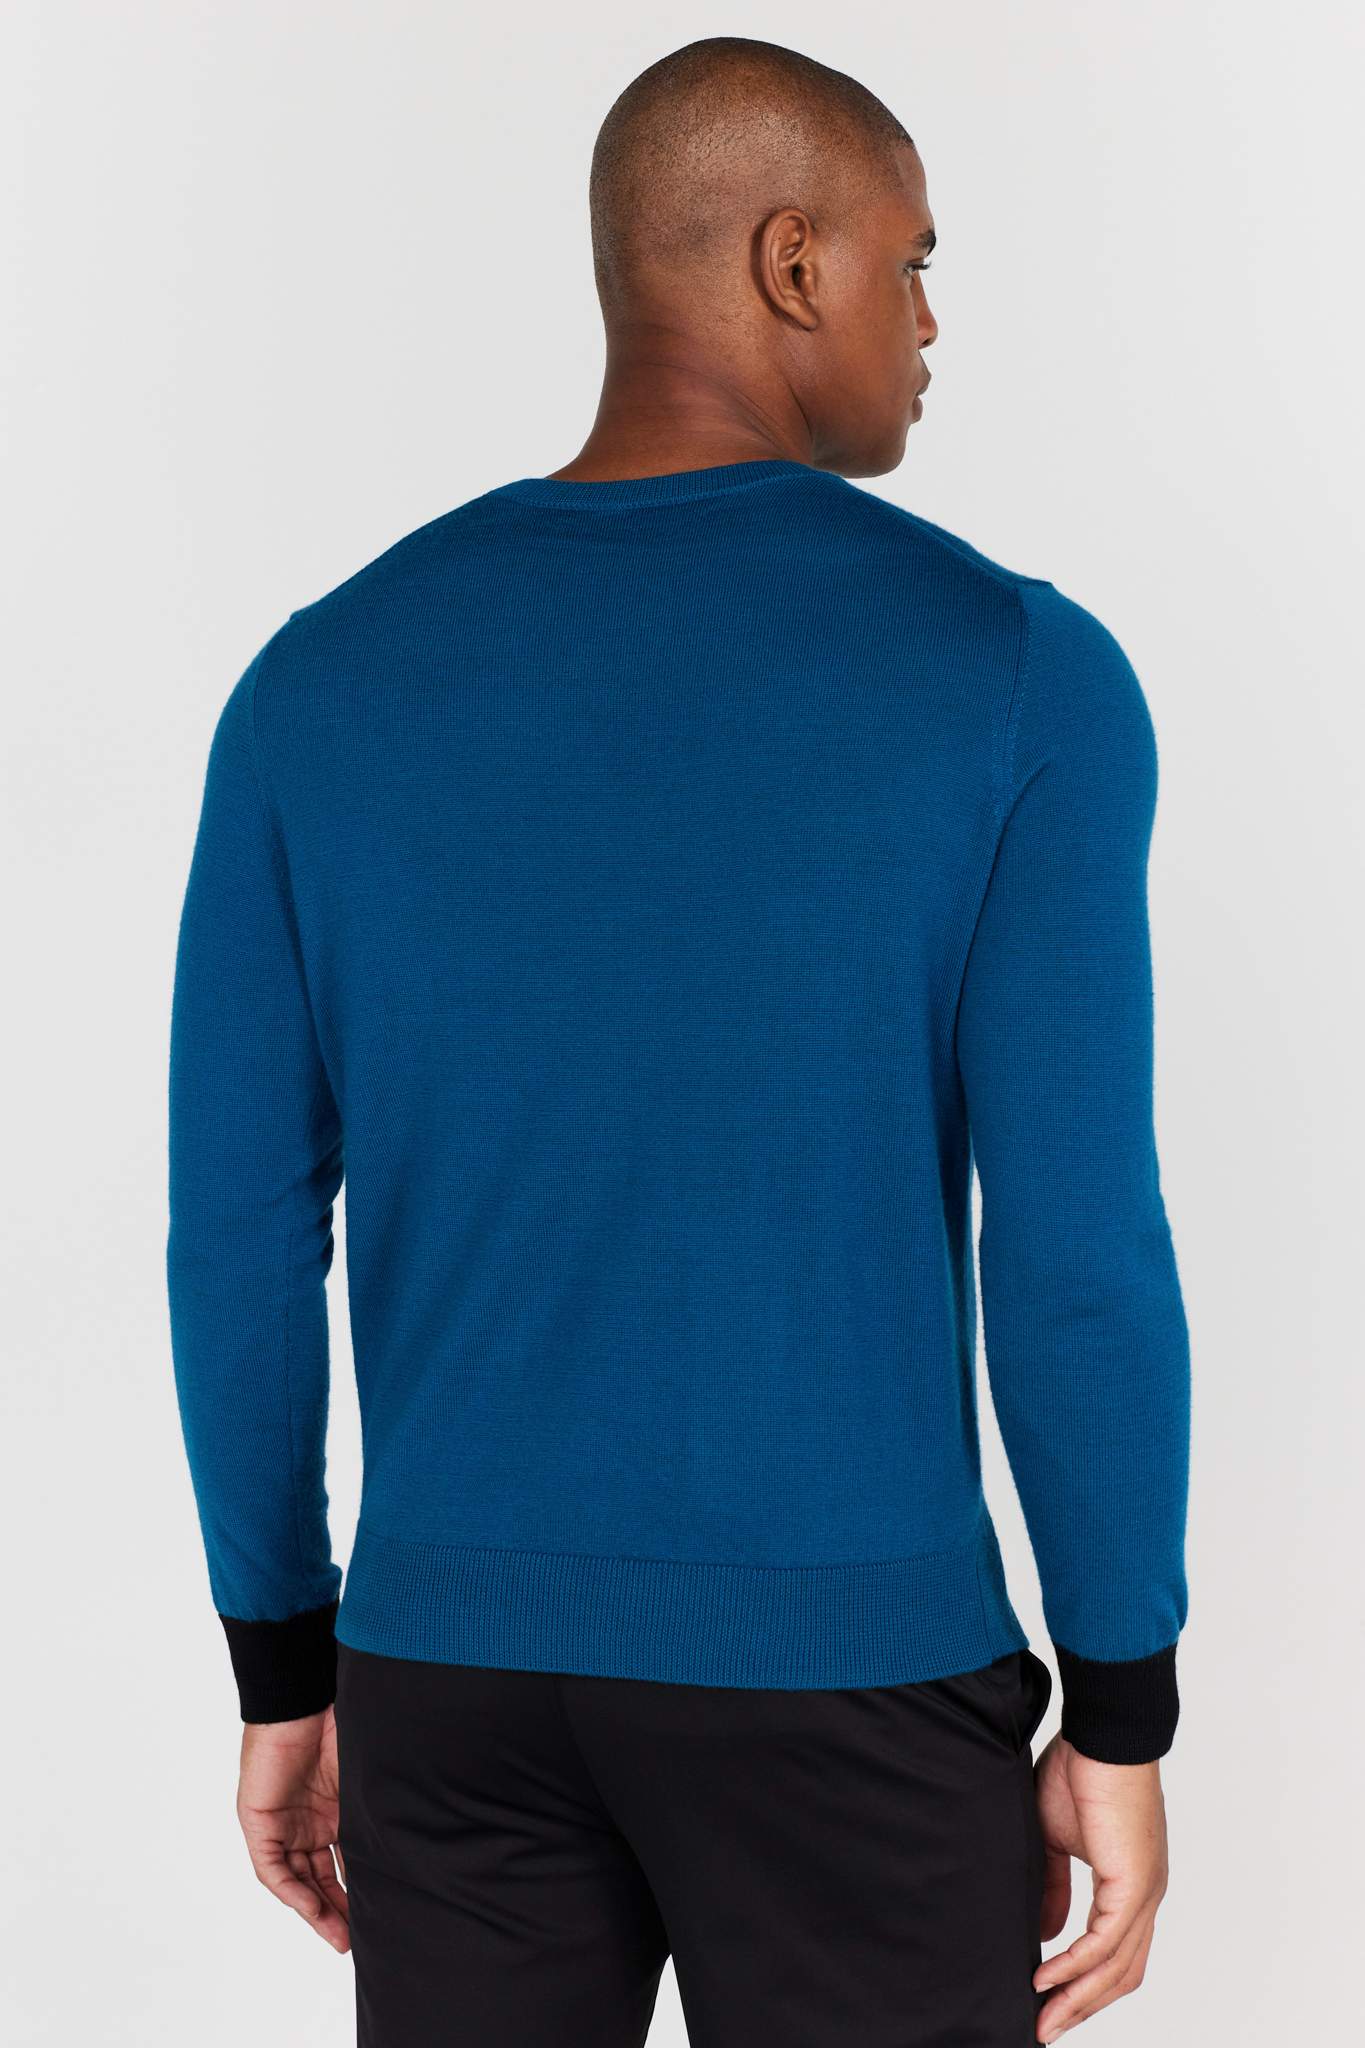 Windward Sweater in Corsair